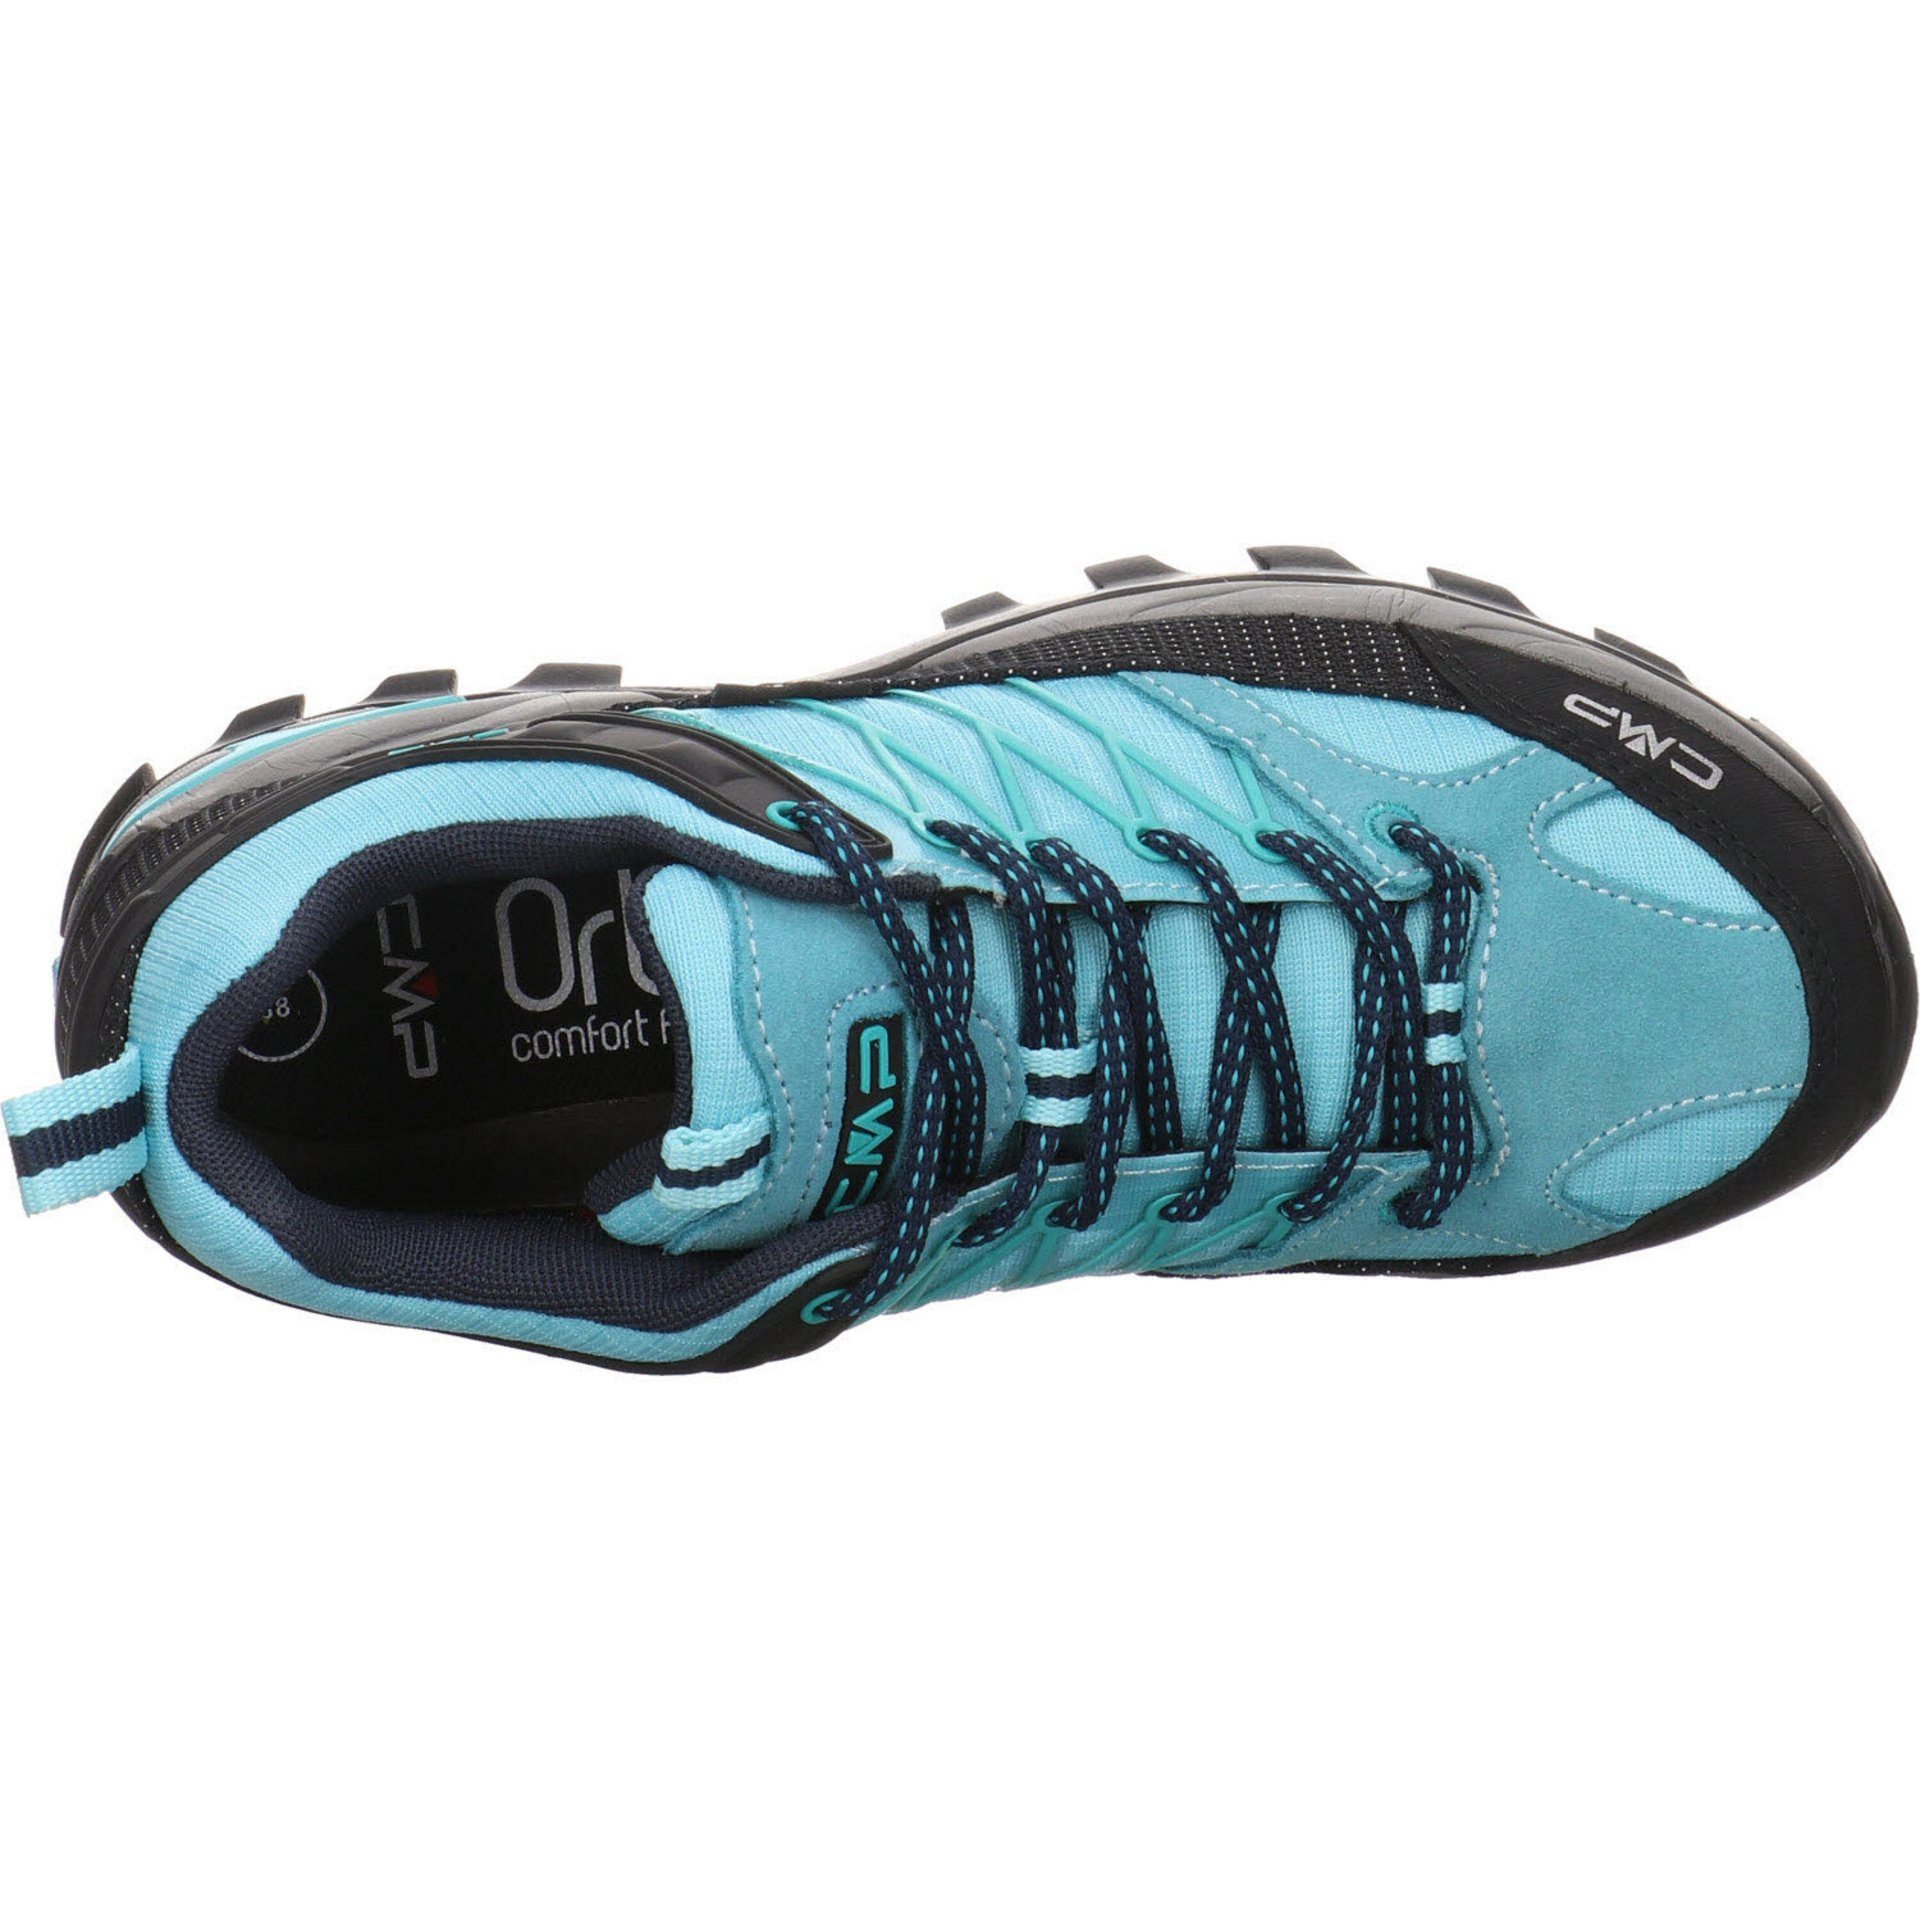 Schuhe Outdoorschuh kombiniert blau Low Synthetikkombination Rigel Outdoorschuh Outdoor Damen CMP mit